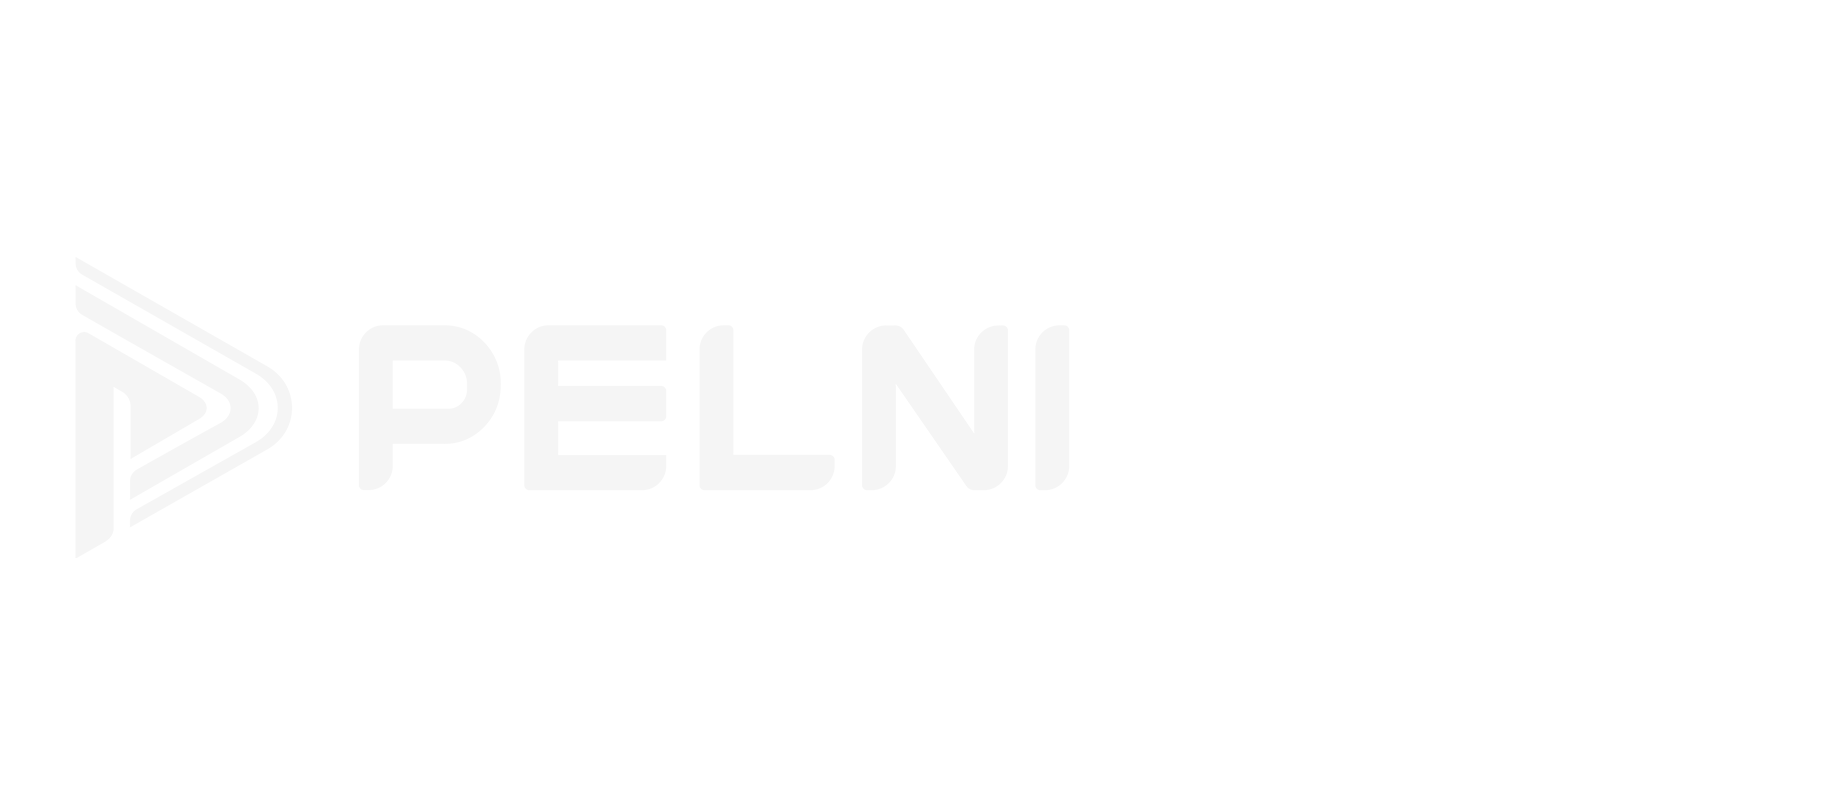 E- PPID